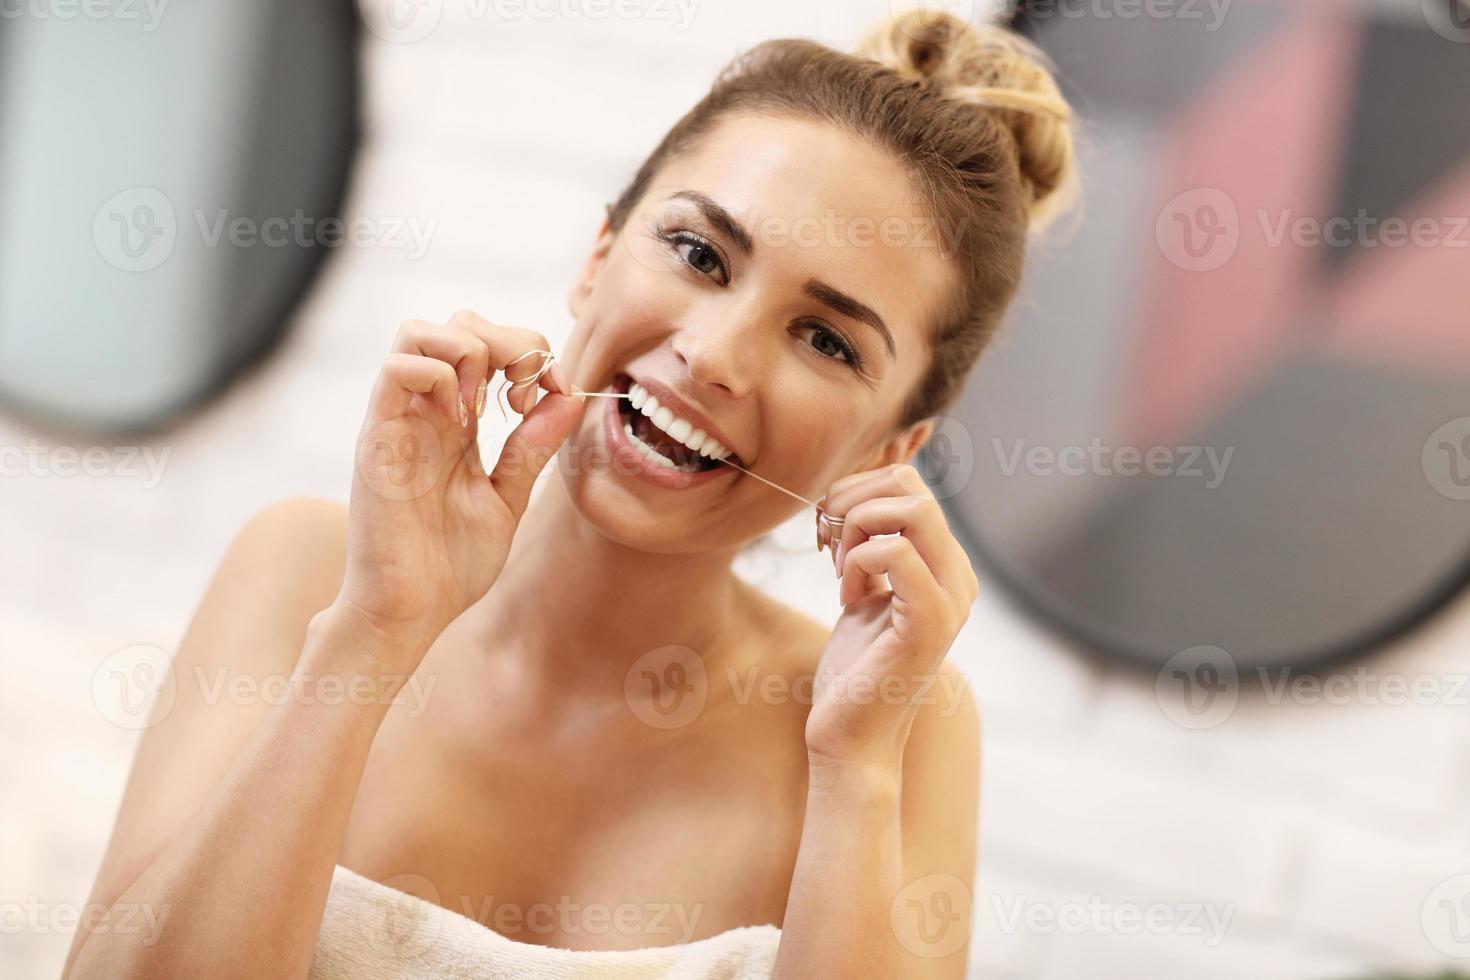 Young woman brushing teeth in bathroom photo